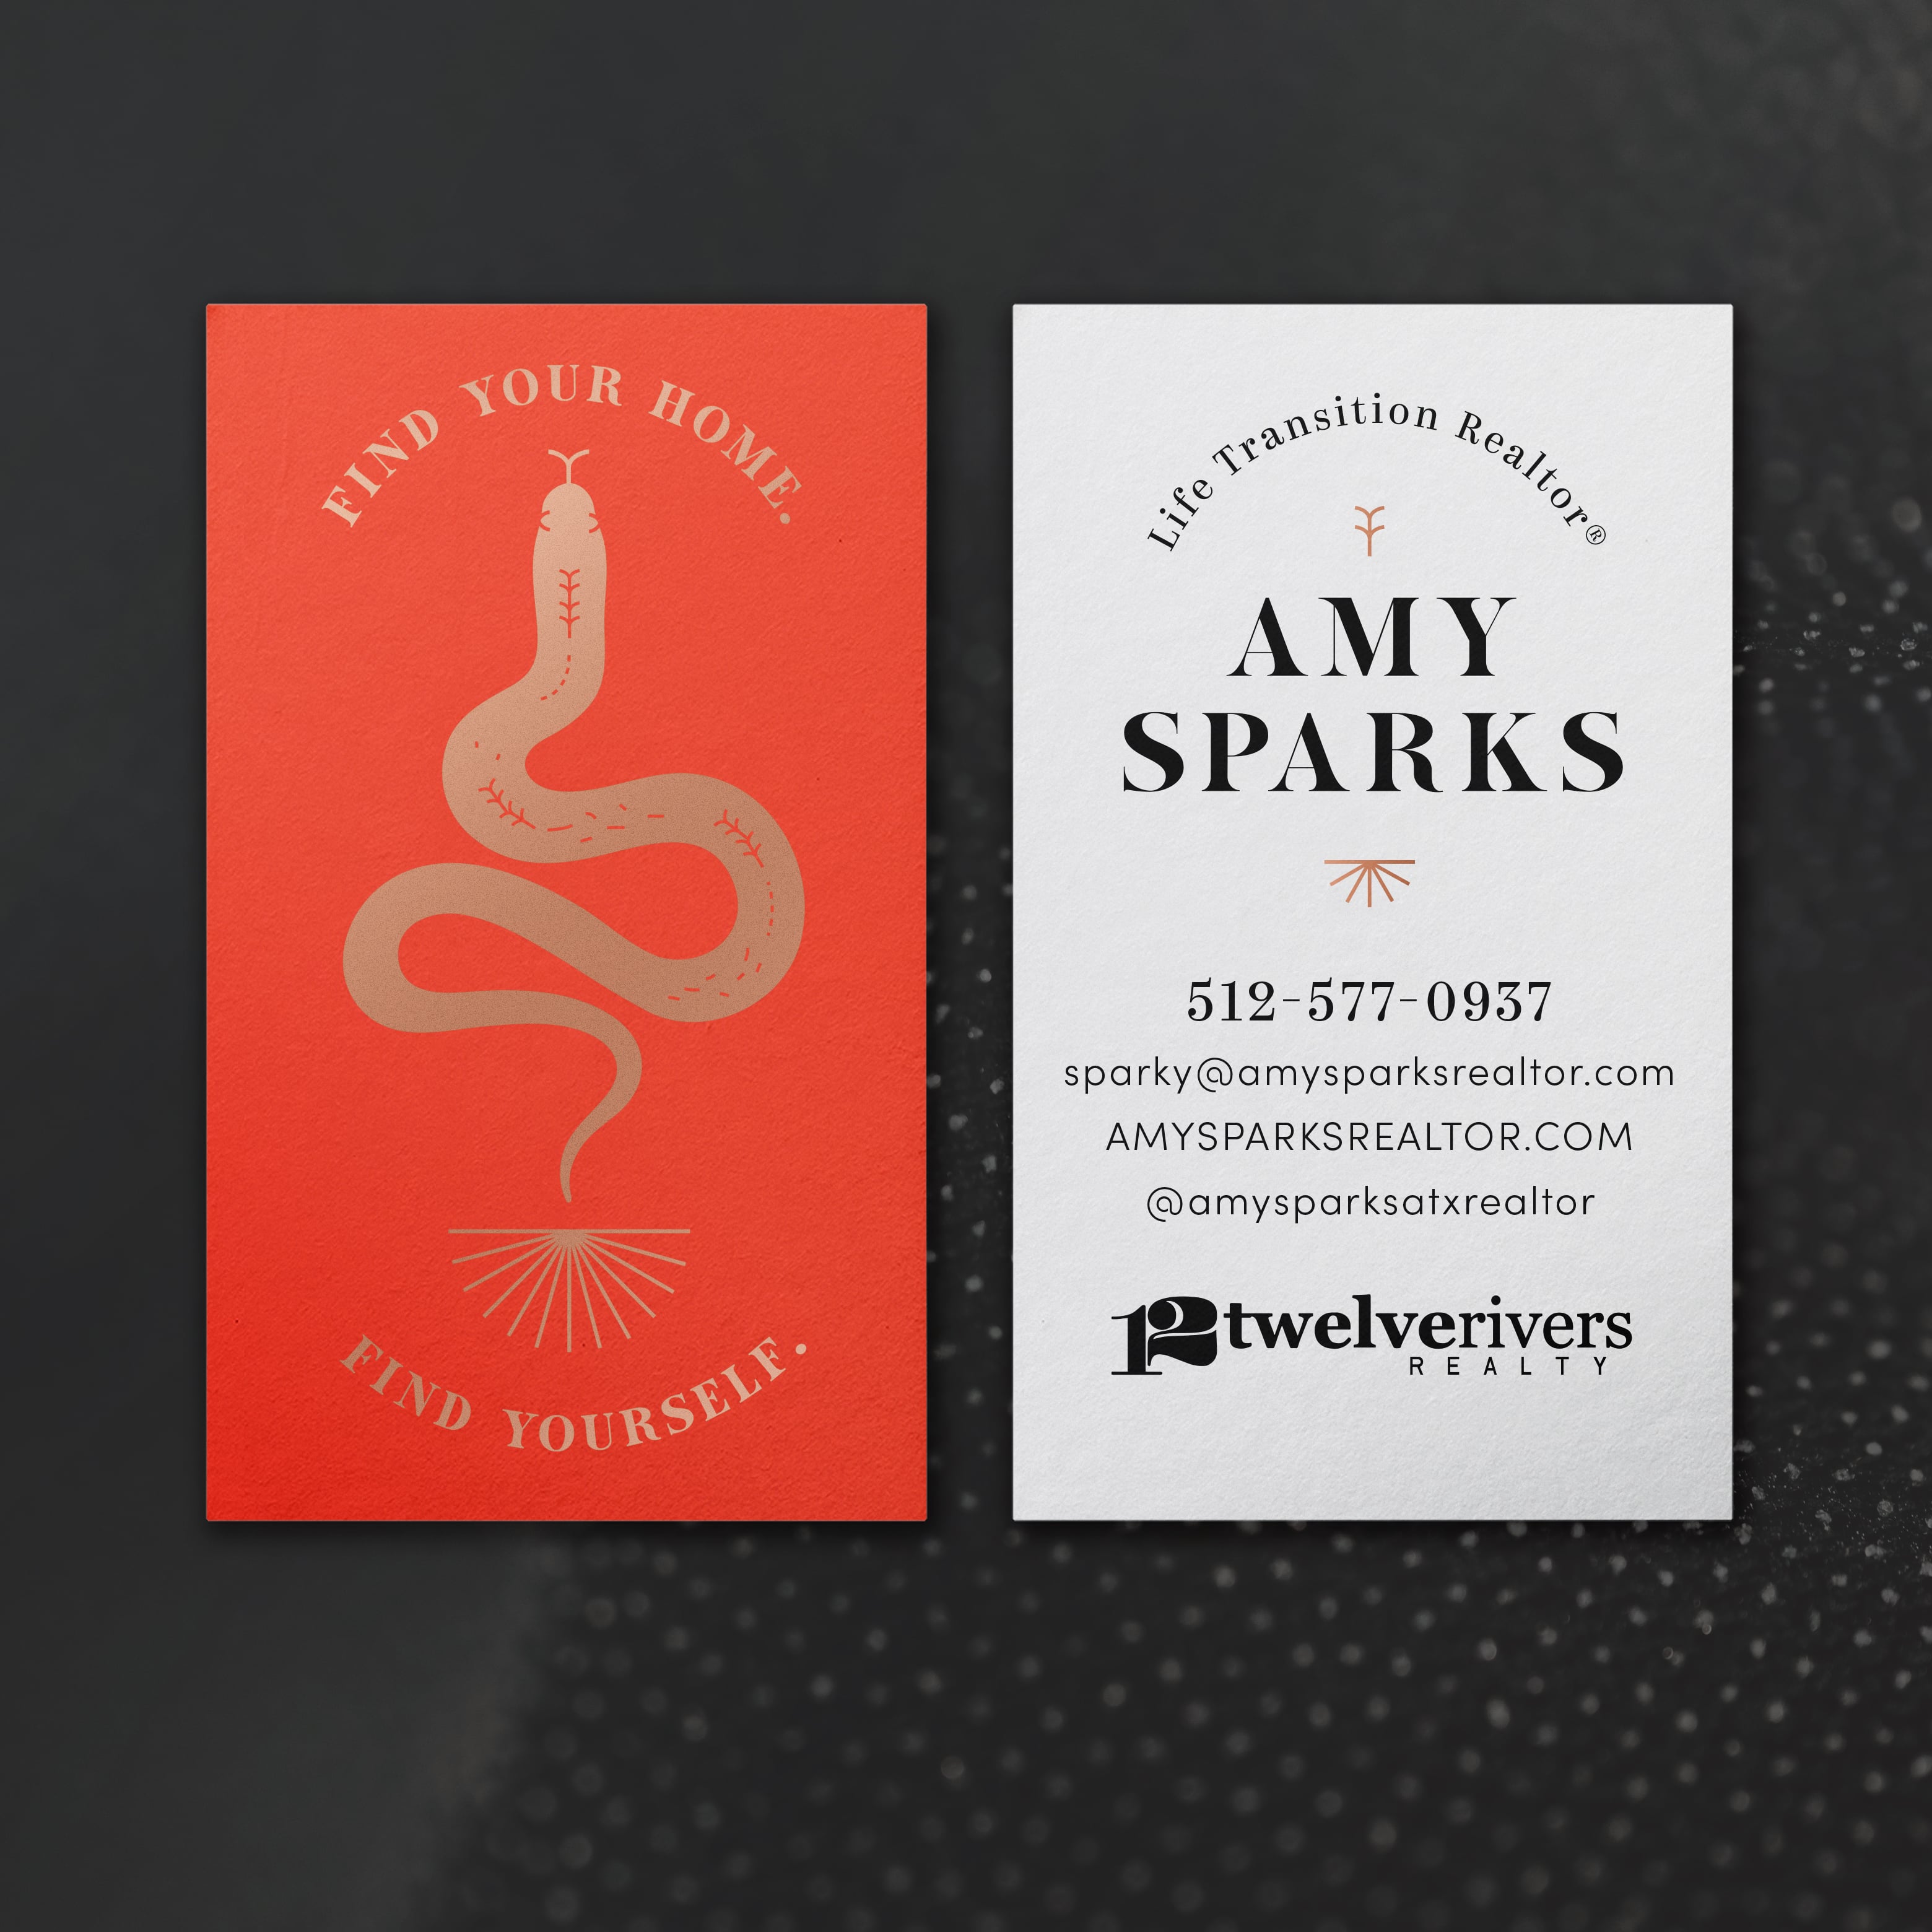 Amy Sparks Business Card Design